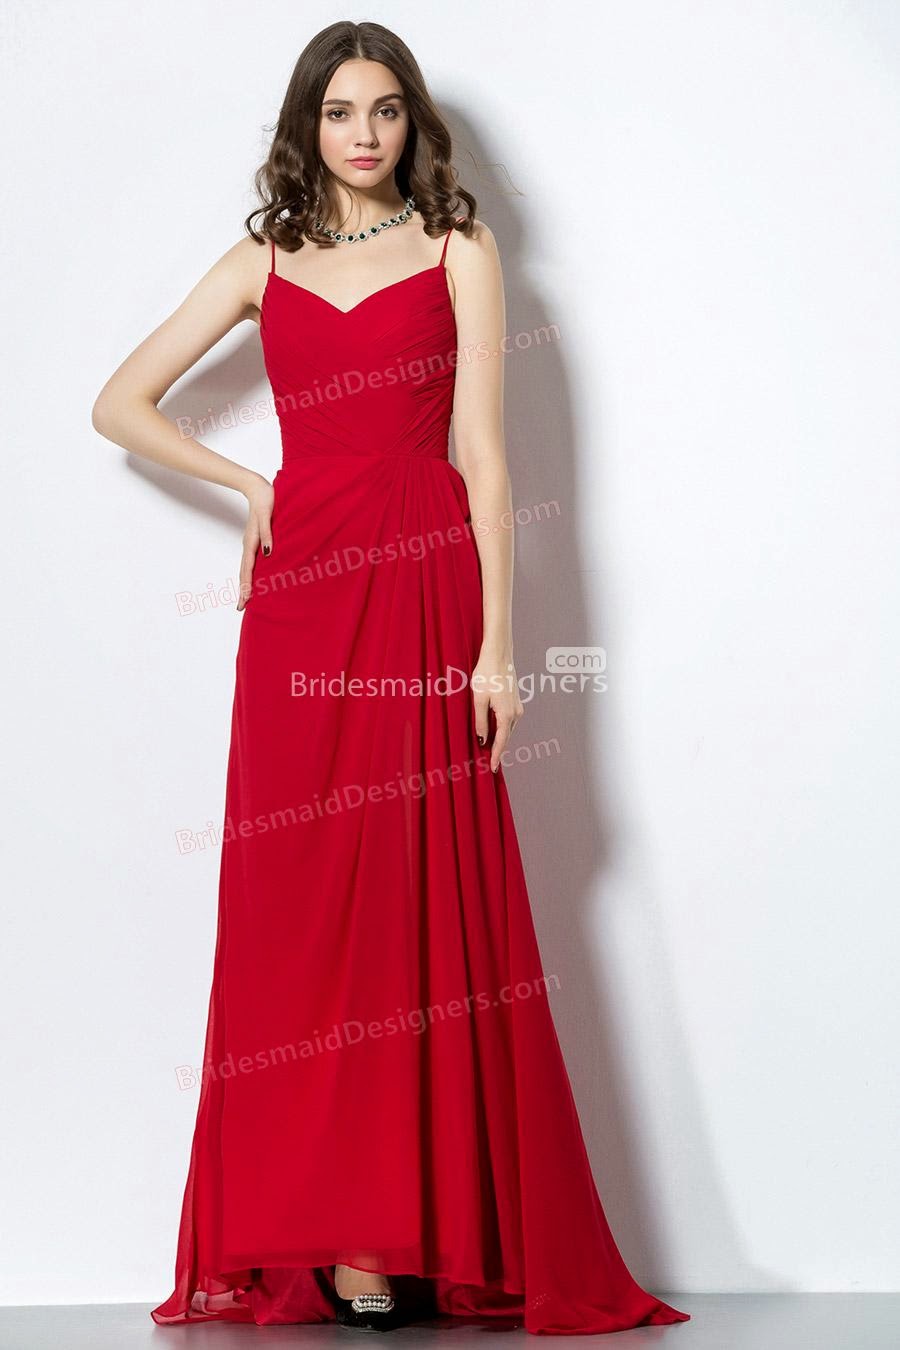 http://www.bridesmaiddesigners.com/chic-red-spaghetti-straps-v-neck-long-chiffon-bridesmaid-dress-1127.html